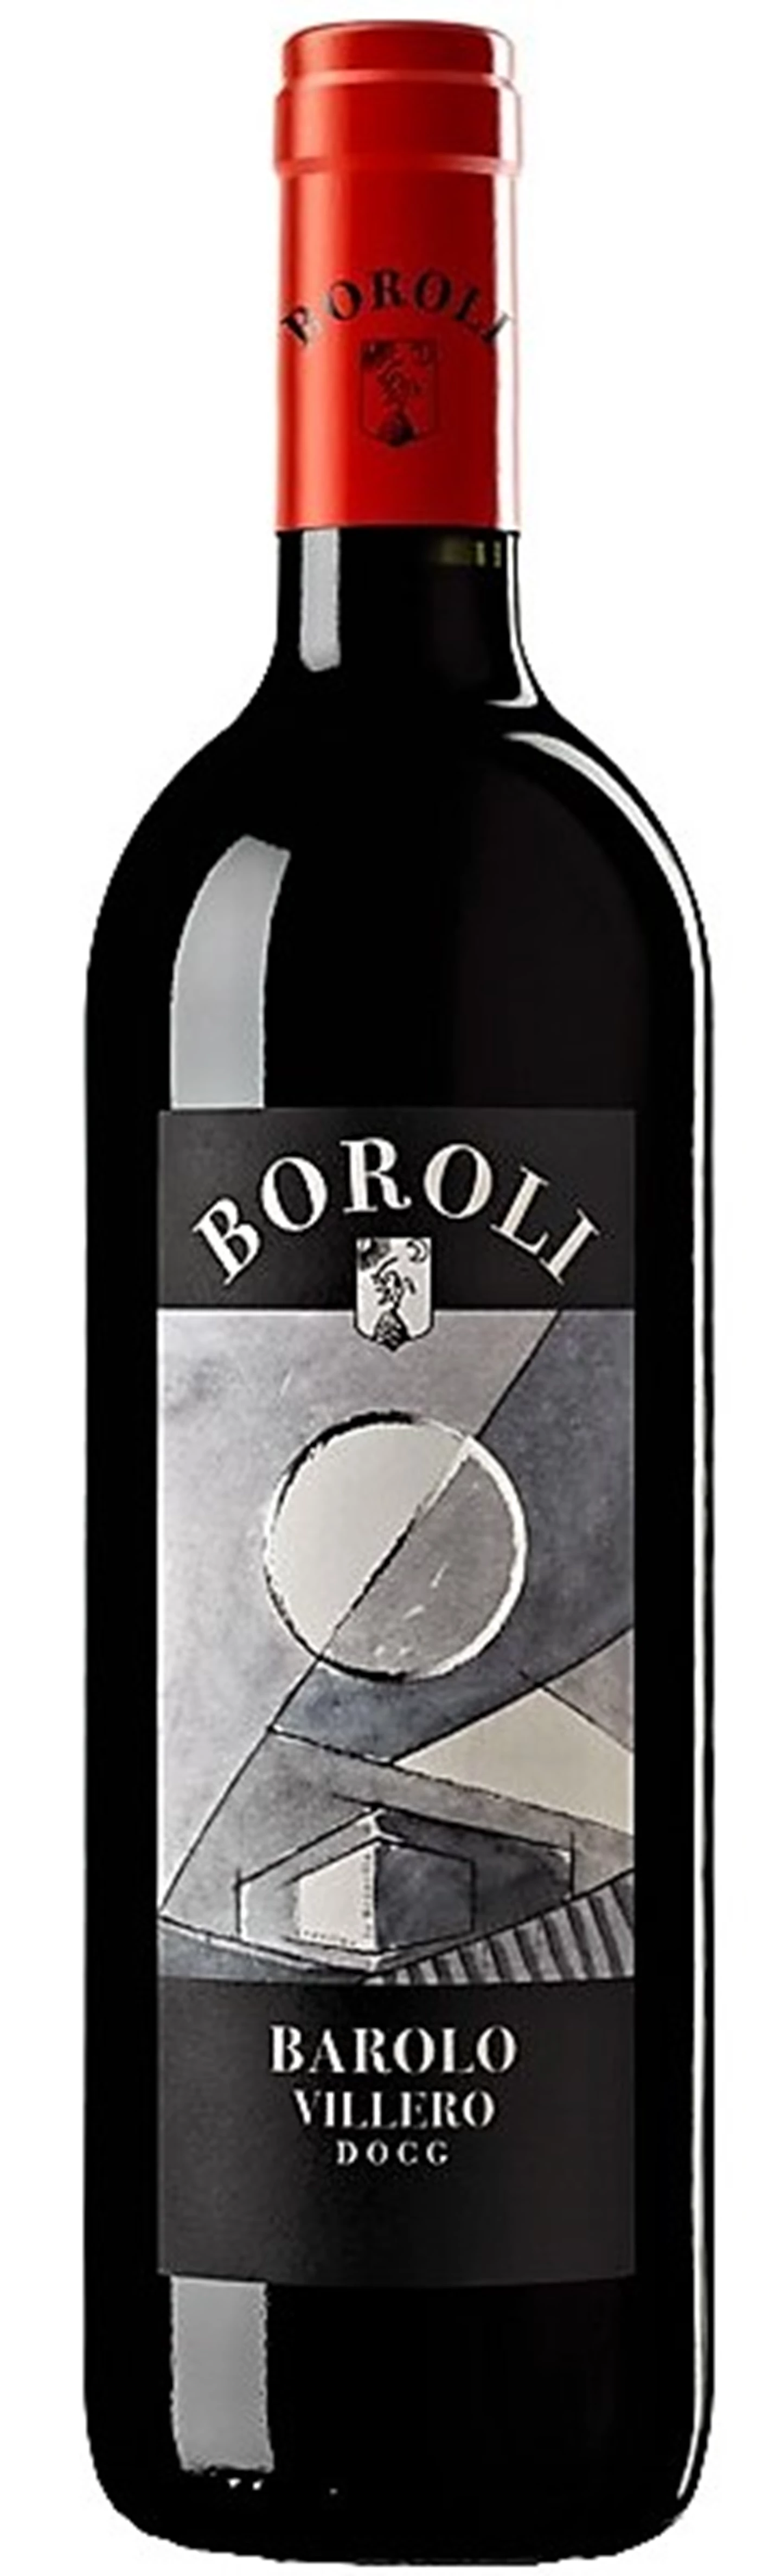 Boroli_Barolo-Villero-OLDLABEL